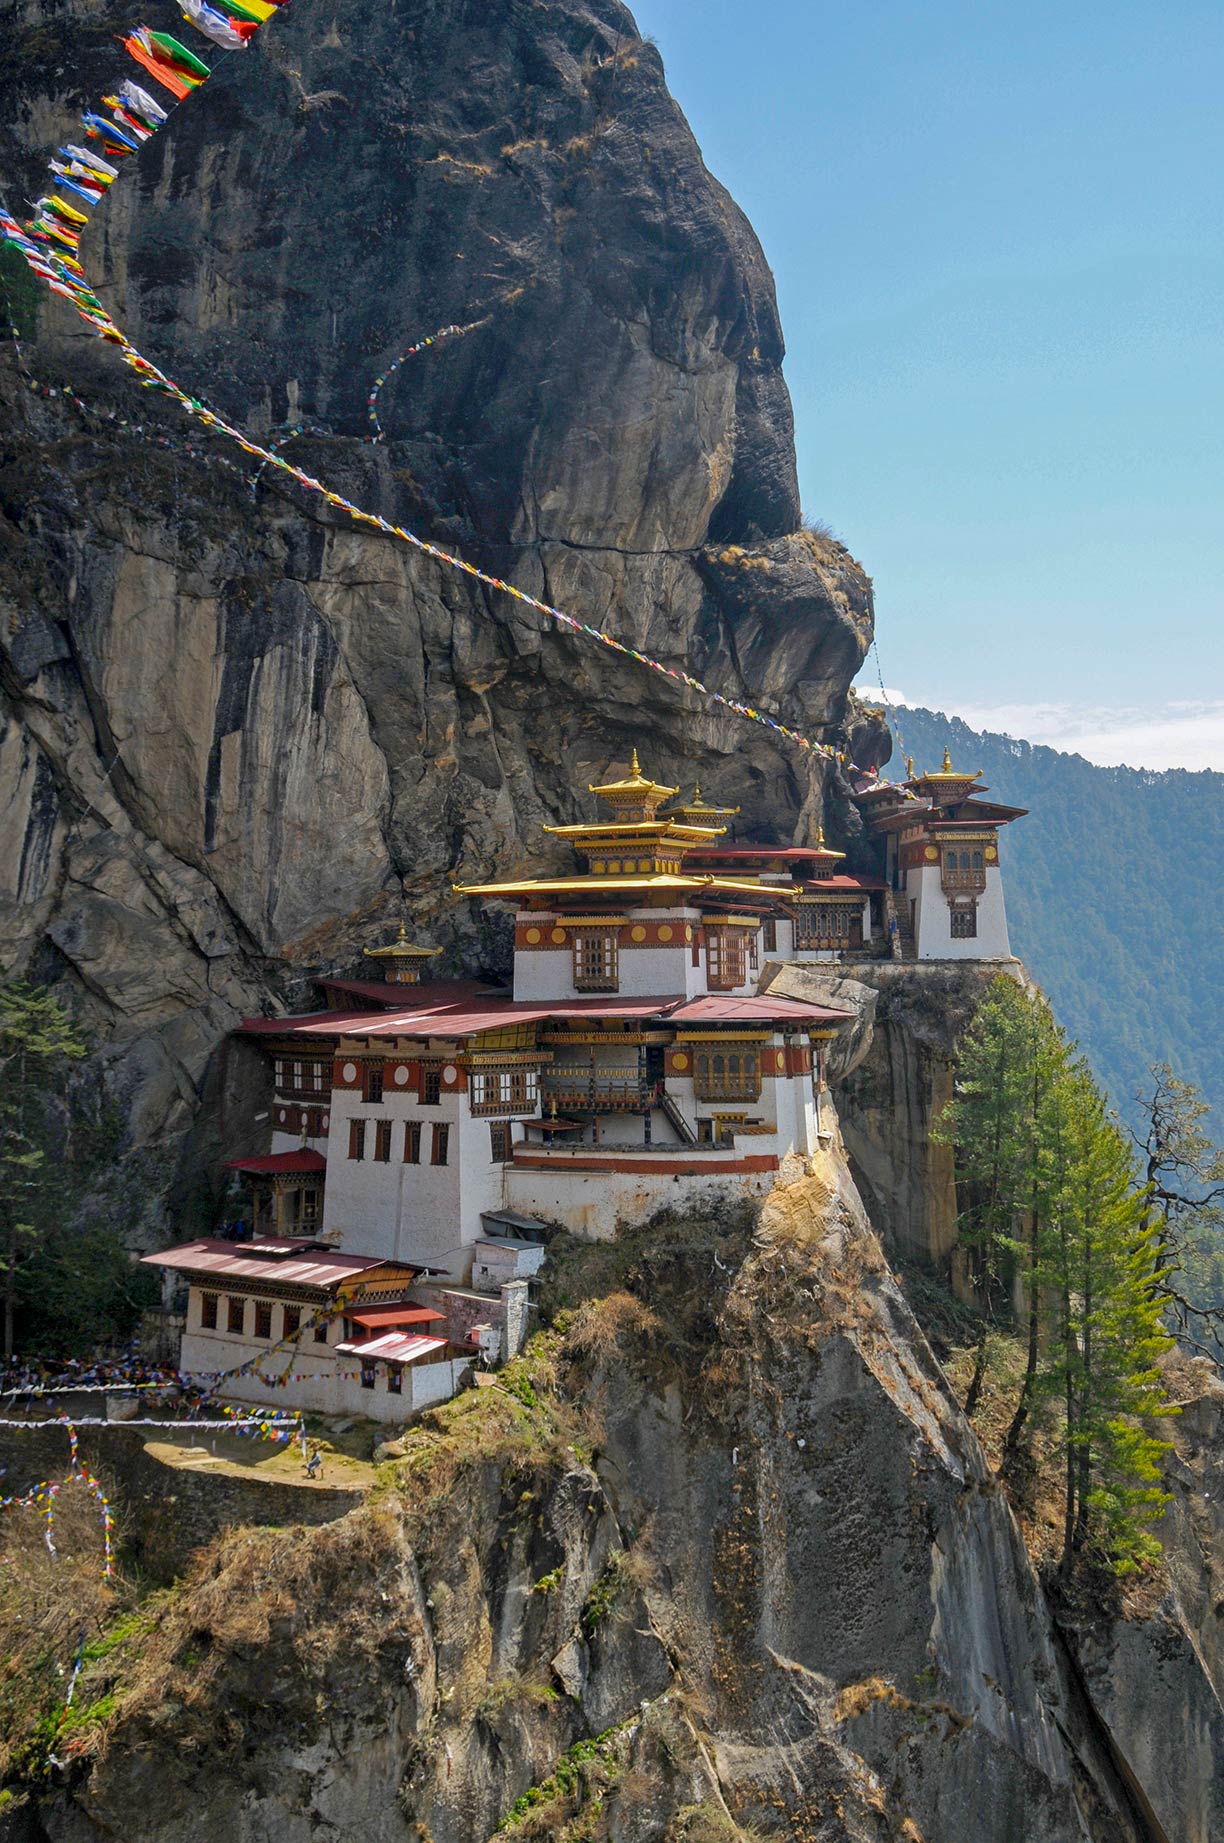 Taktshang Buddhist temple complex, Paro valley, Bhutan